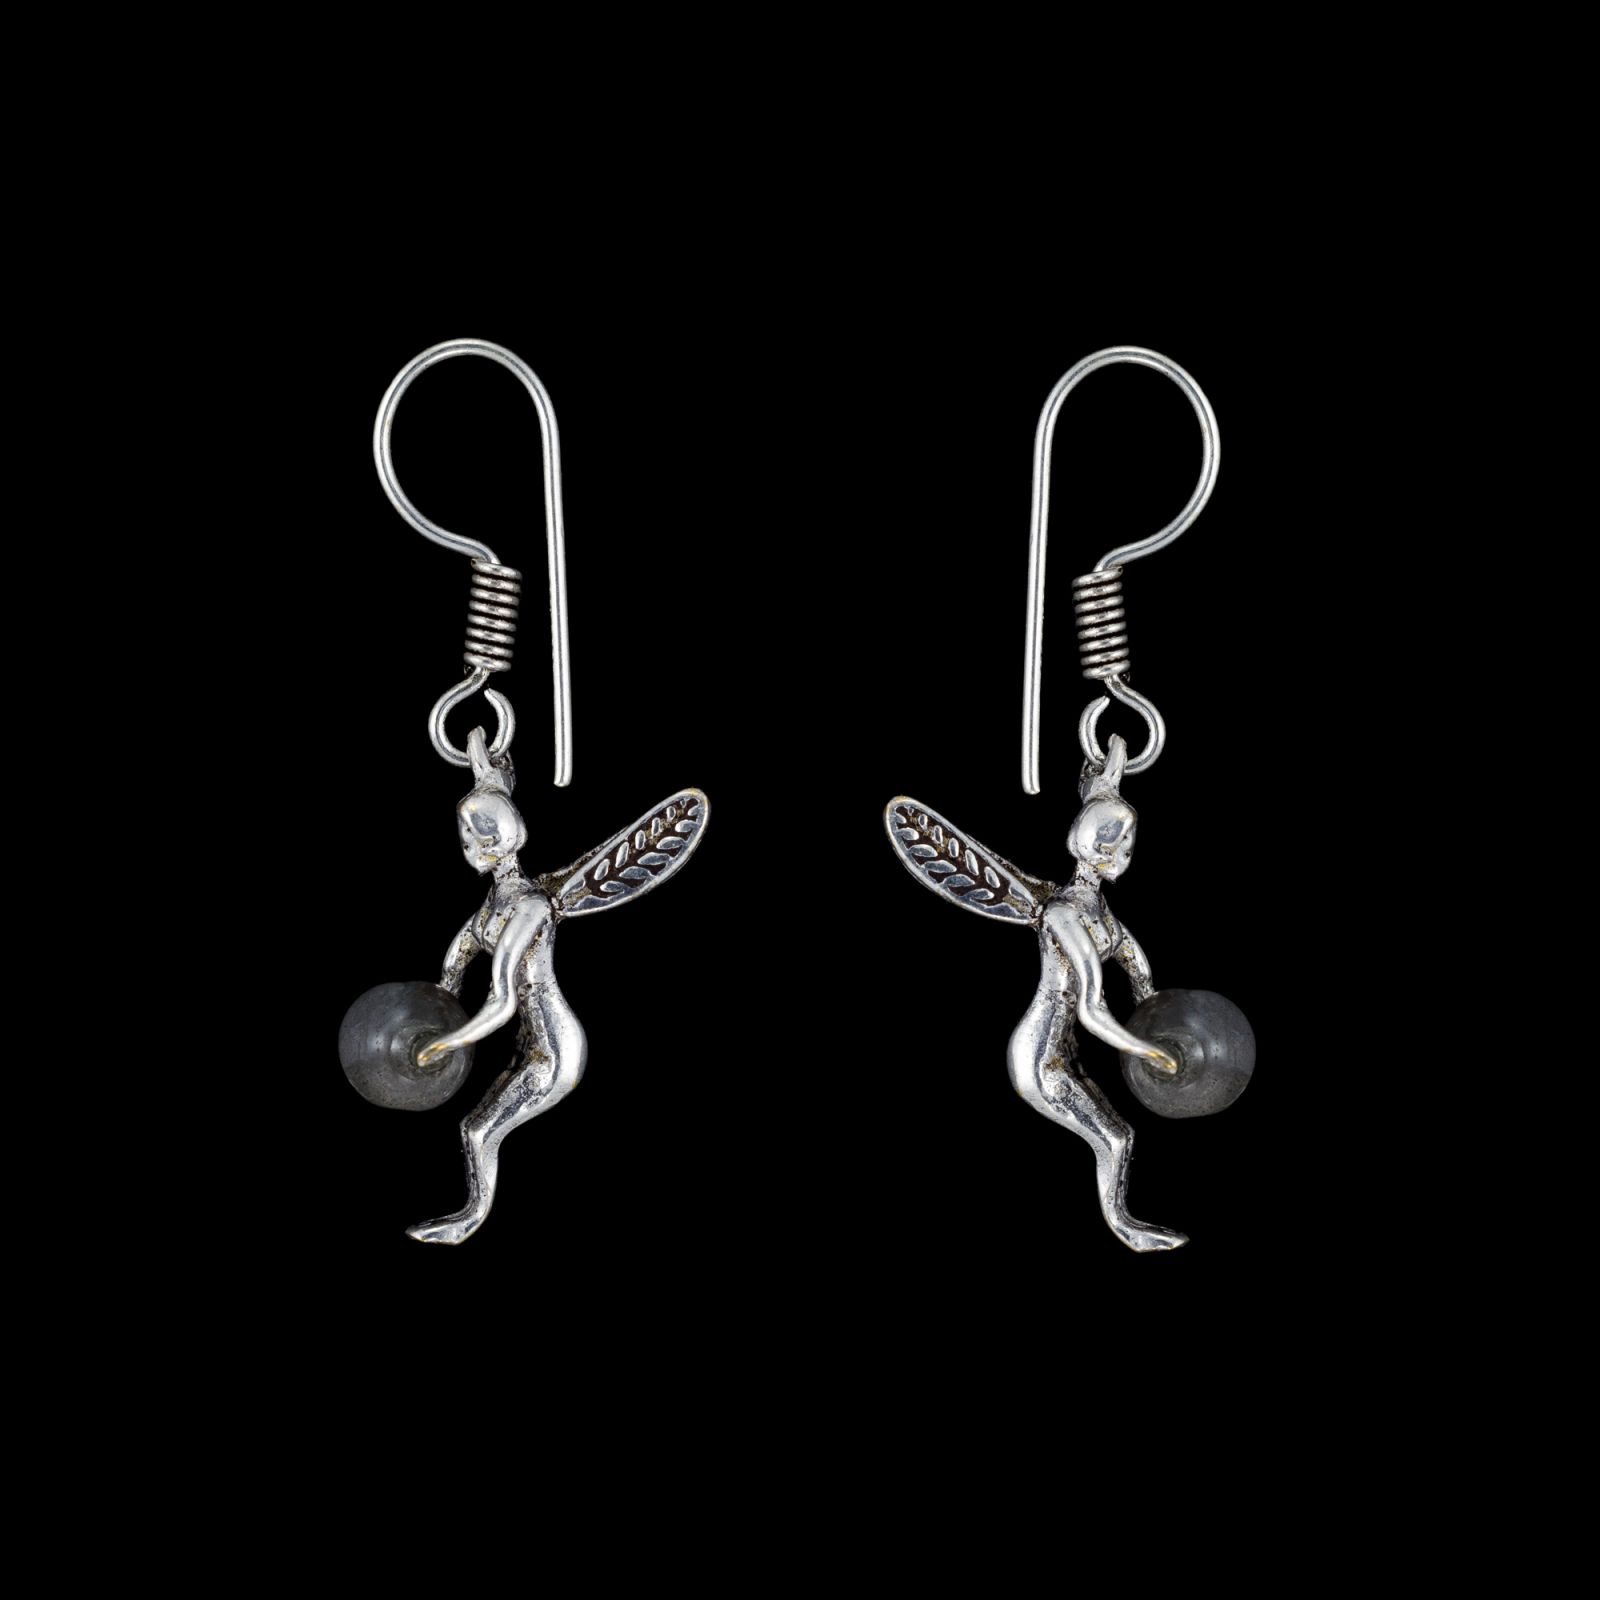 German silver earrings Gifted Fairies - labradorite India